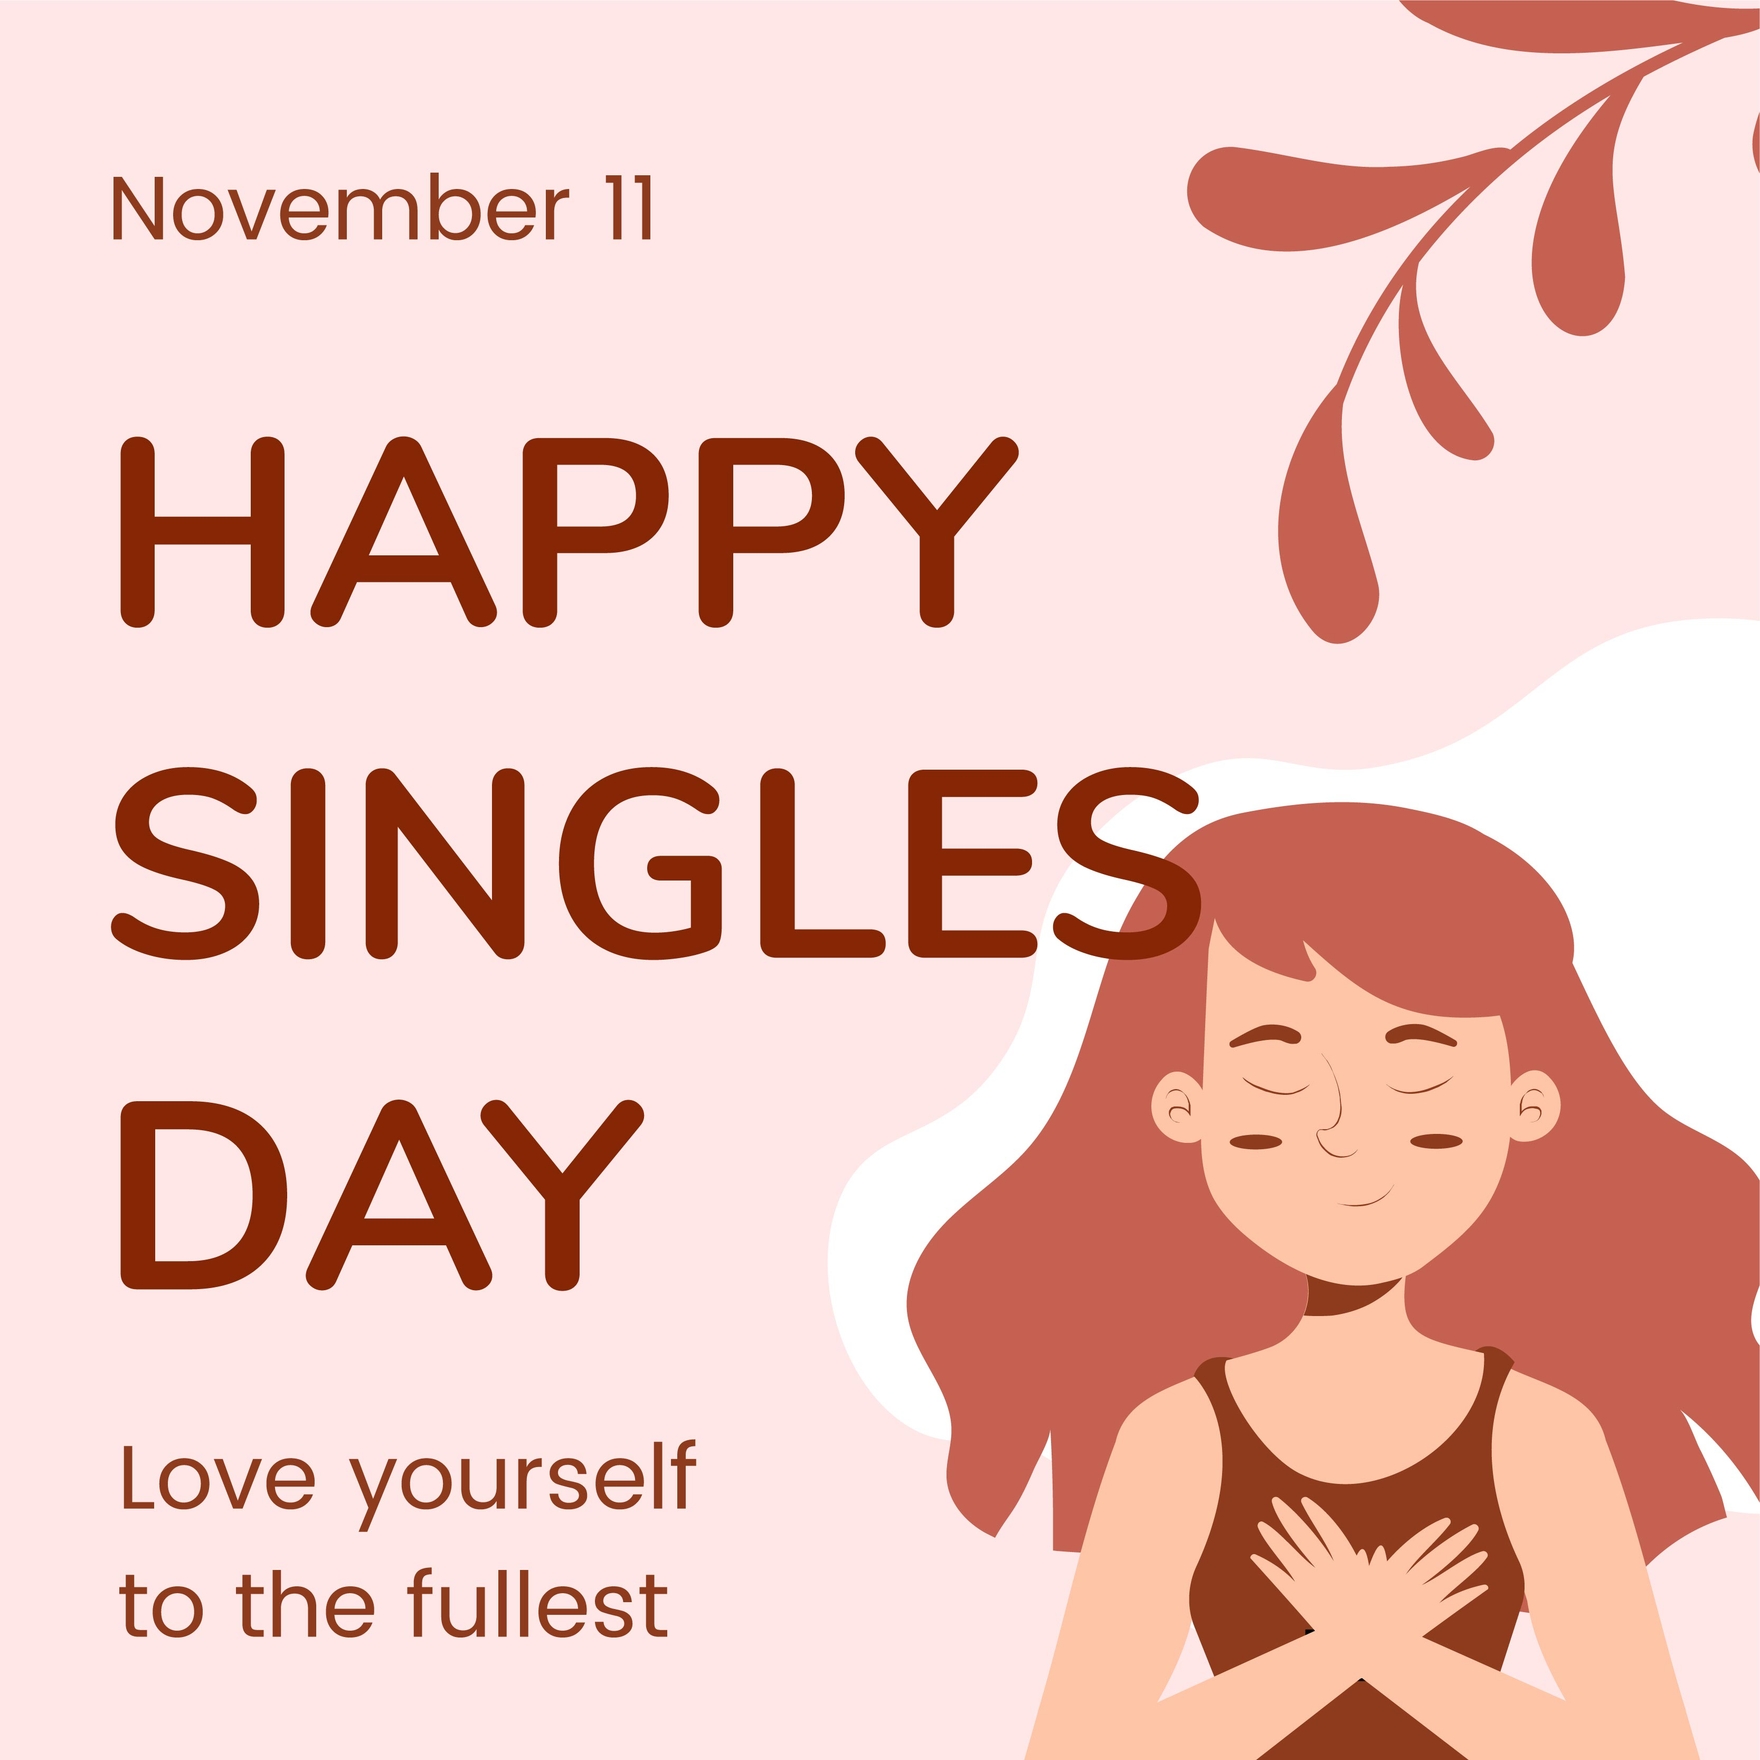 Singles Day WhatsApp Post in Illustrator, JPG, SVG, EPS, PNG